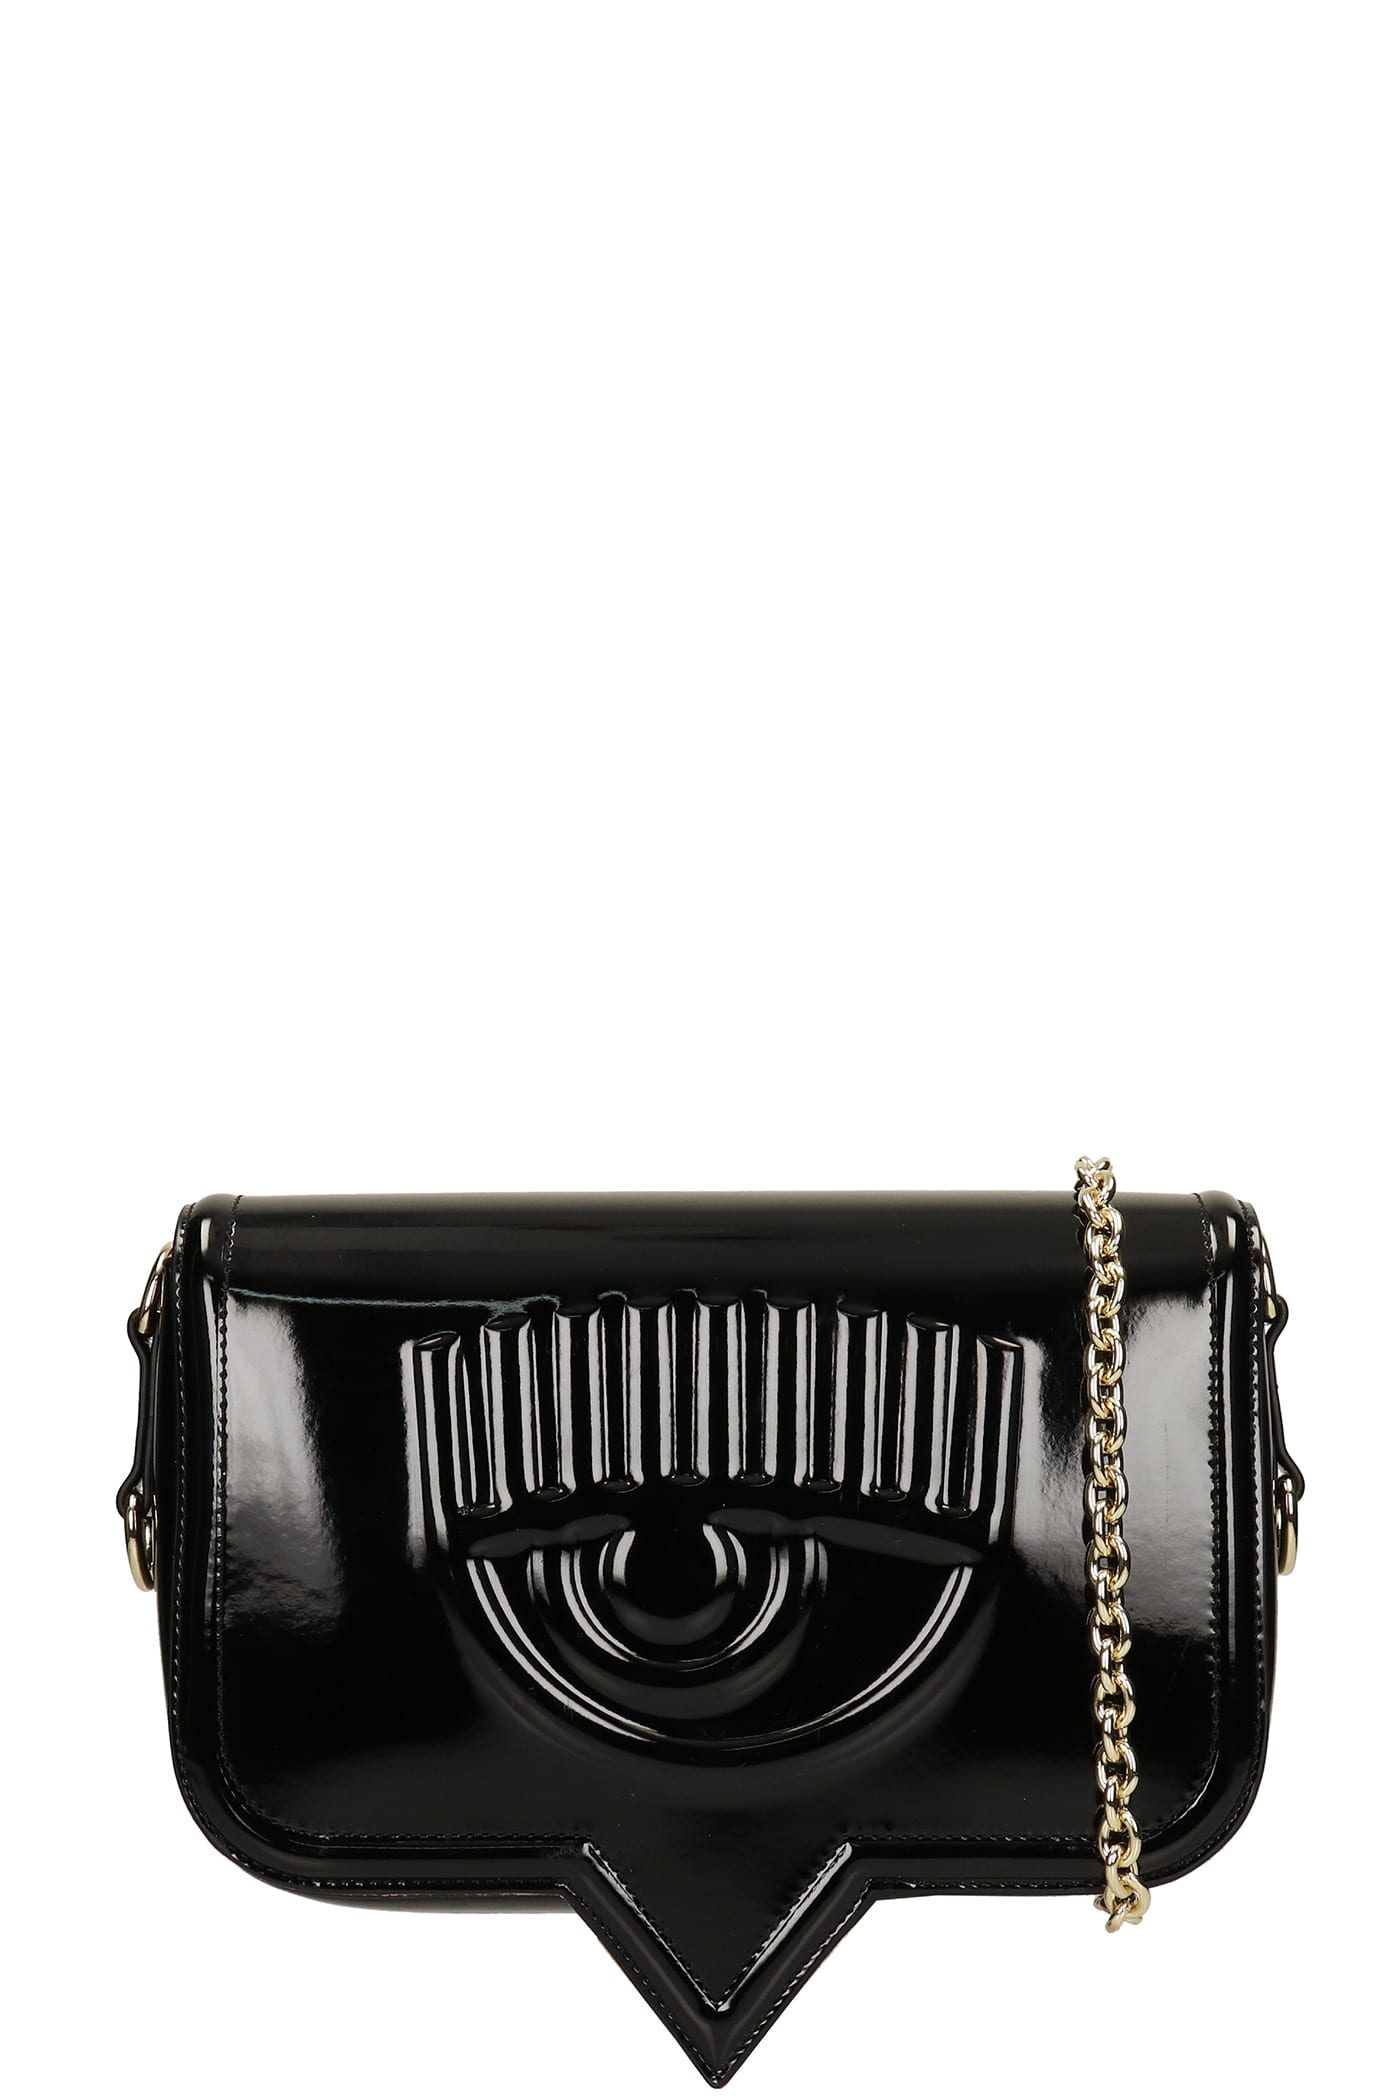 Chiara Ferragni Shoulder Bag In Black Patent Leather